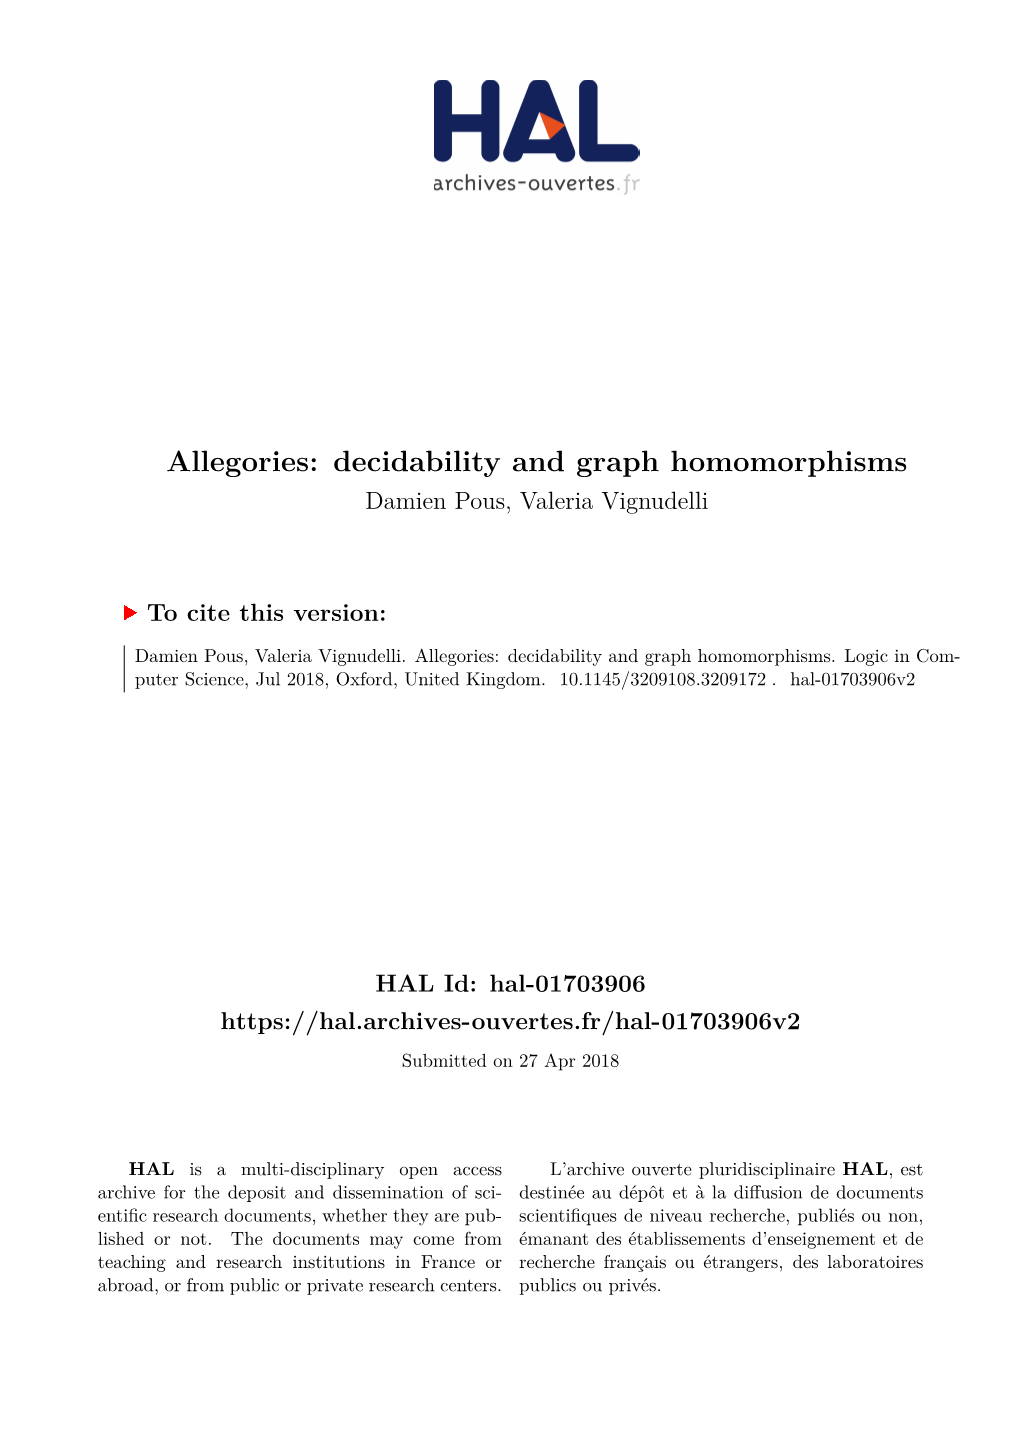 Allegories: Decidability and Graph Homomorphisms Damien Pous, Valeria Vignudelli